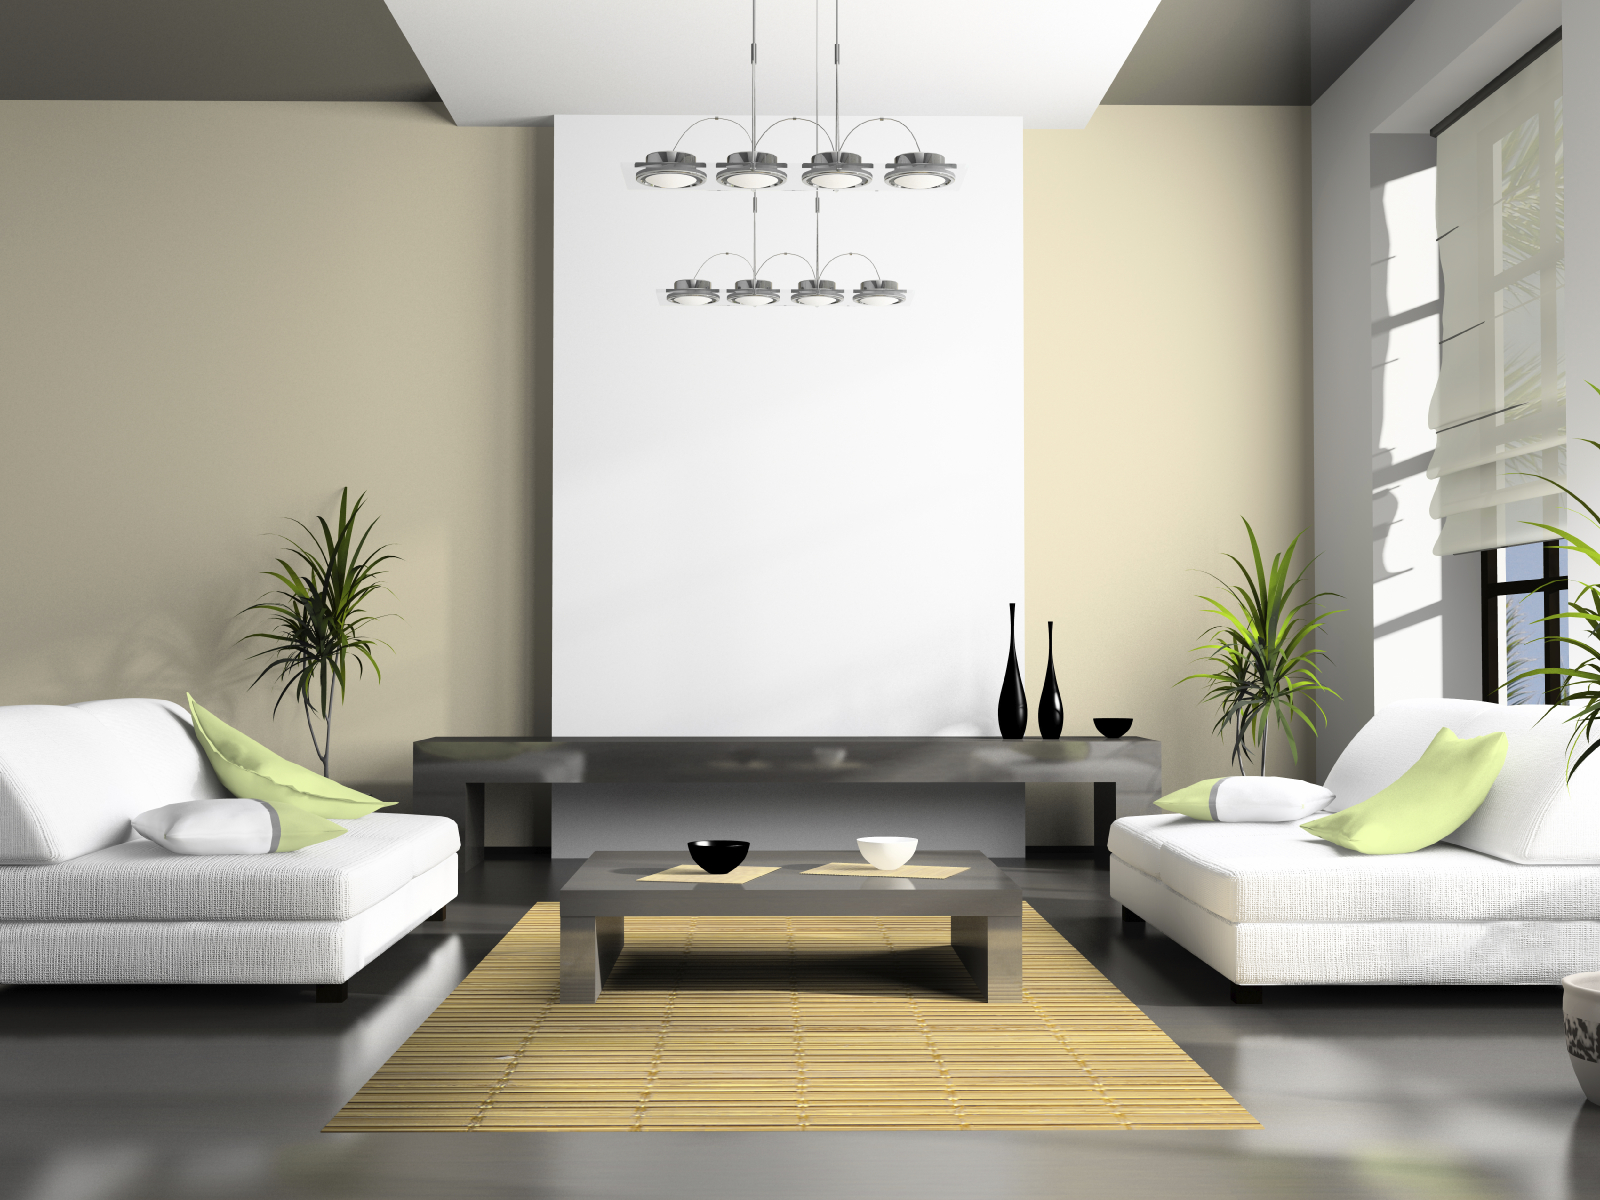 Living Room Fireplace Interior Design Ideas